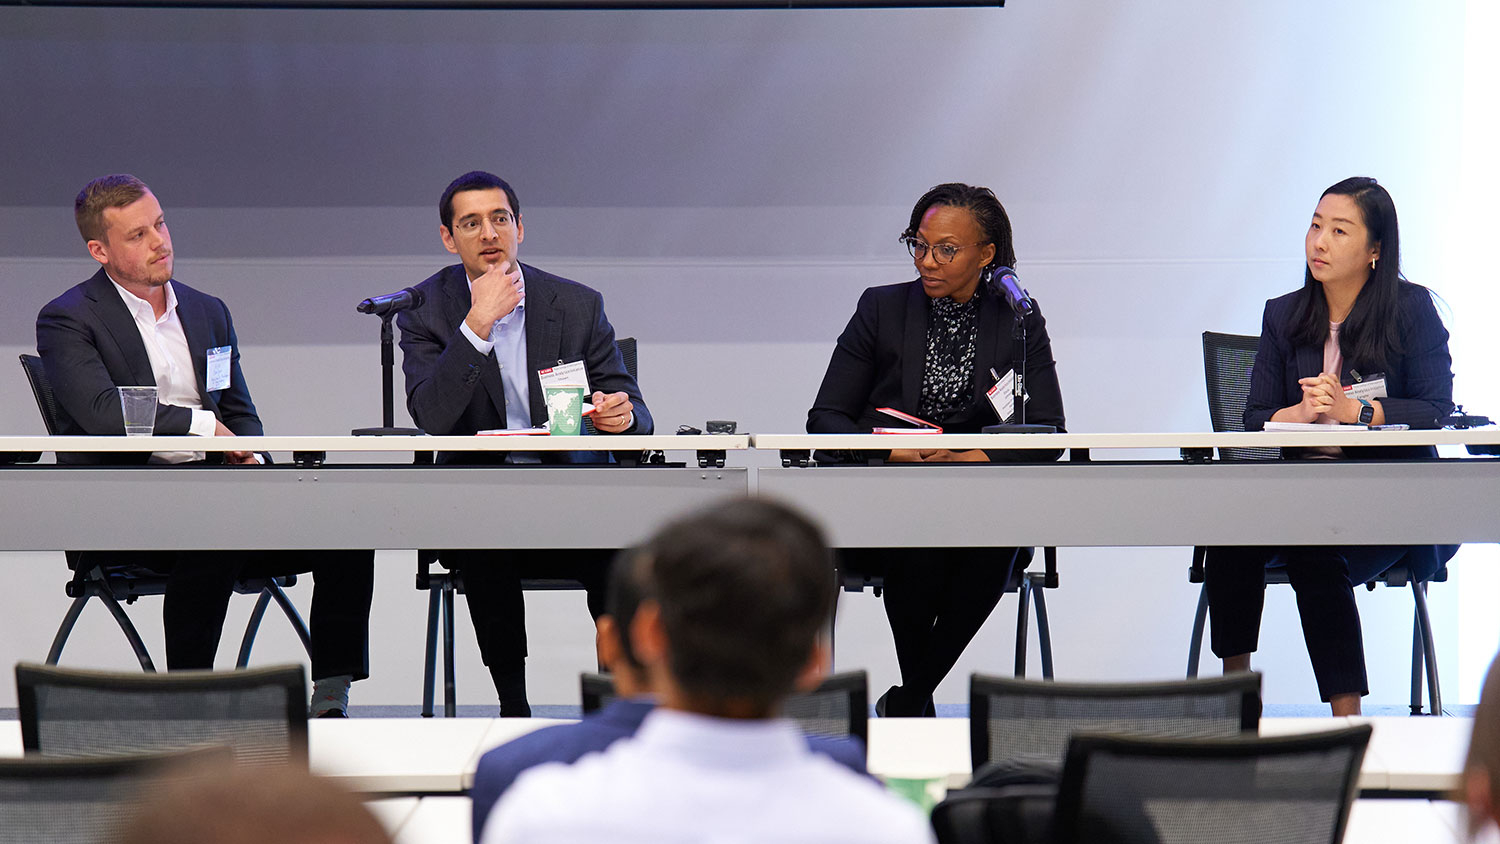 panel discussion participants at BAI Roundtable